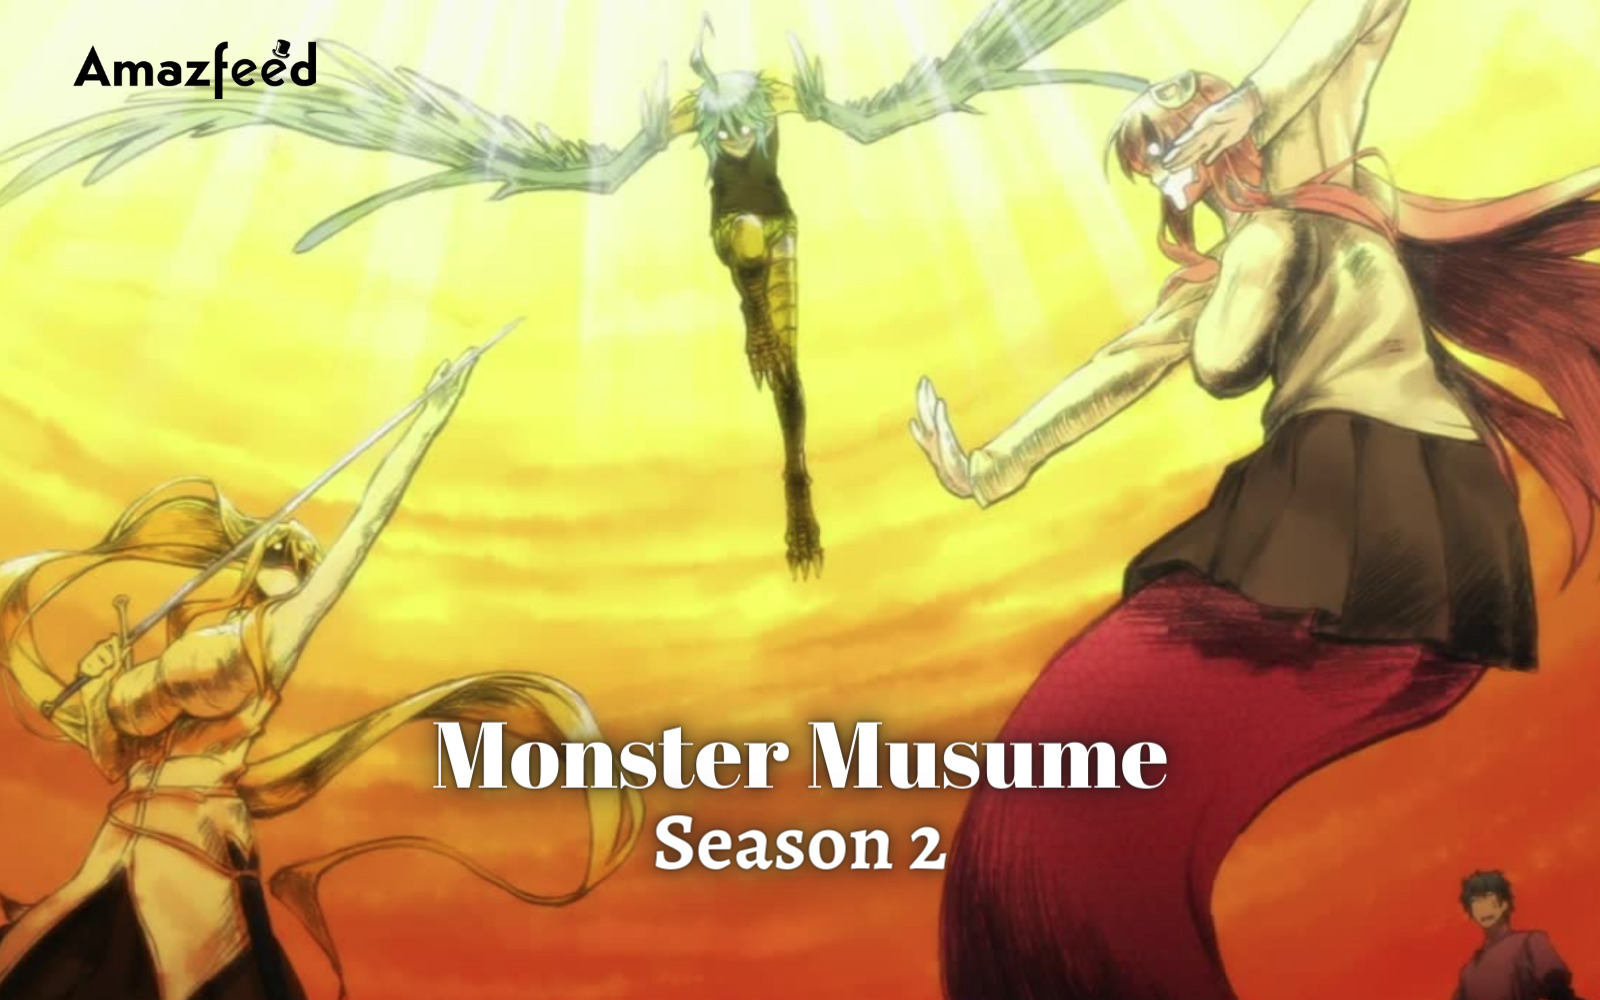 Monster Musume Season 2 Release Date